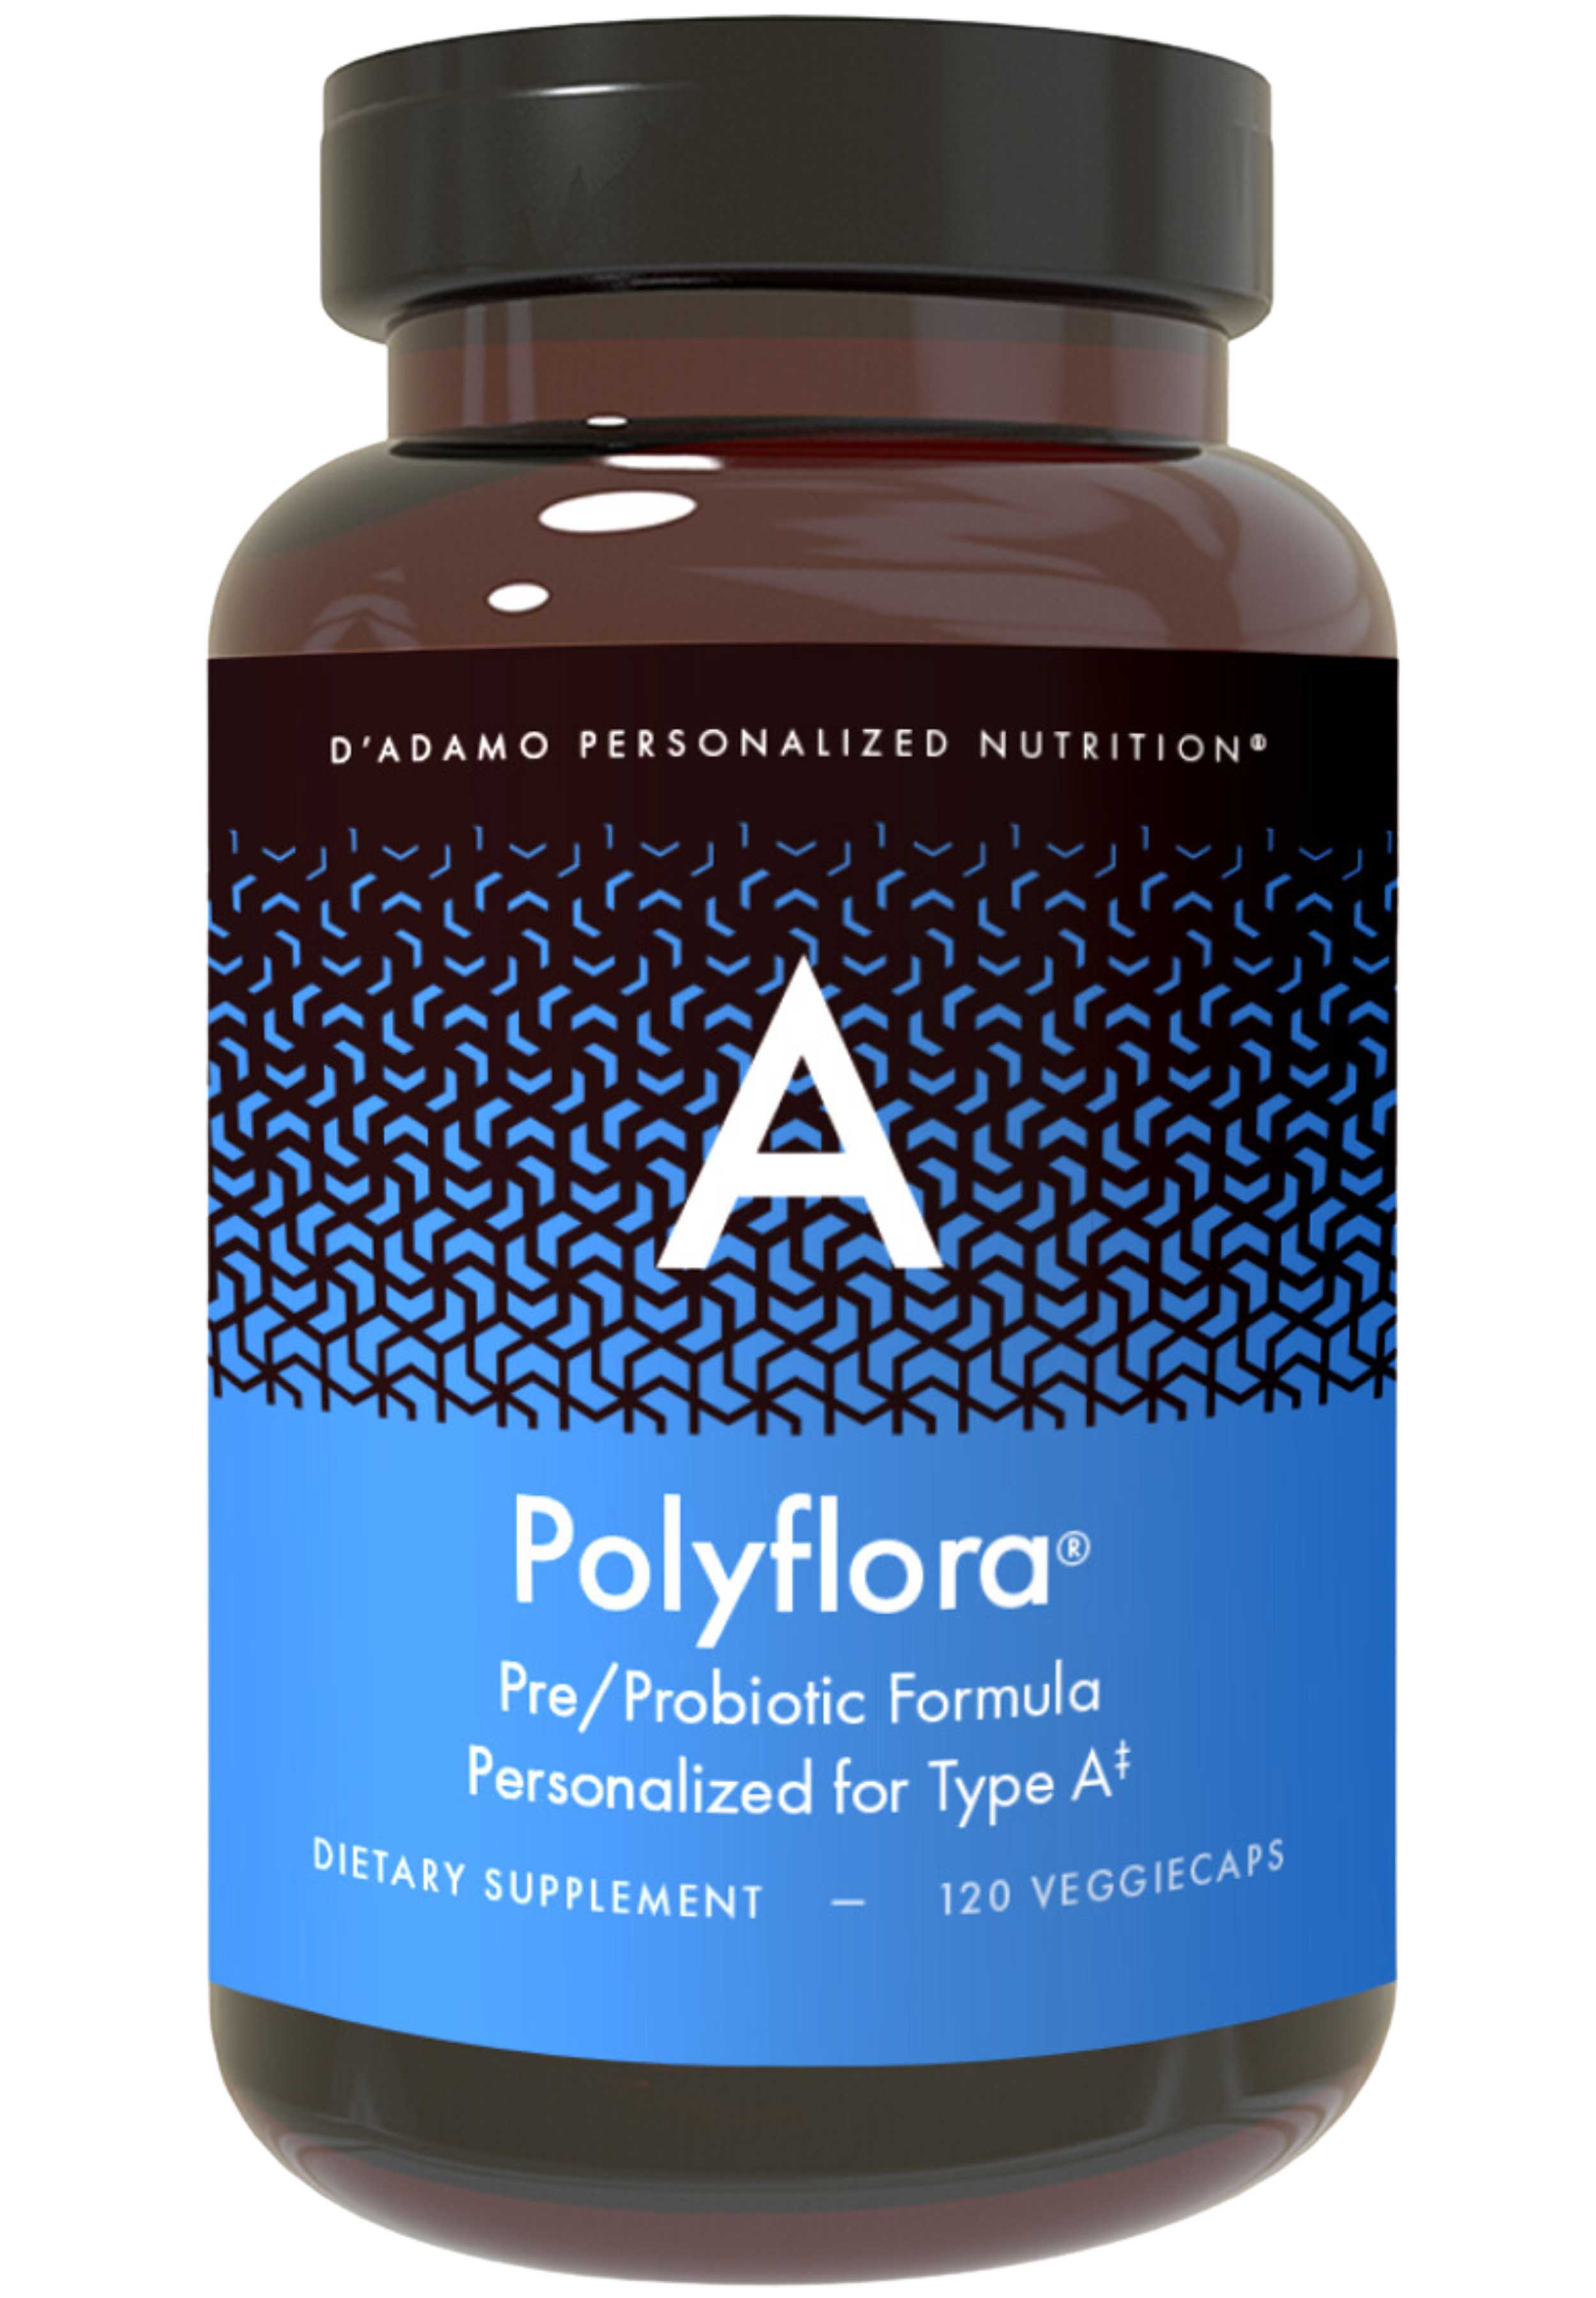 D'Adamo Personalized Nutrition Polyflora A